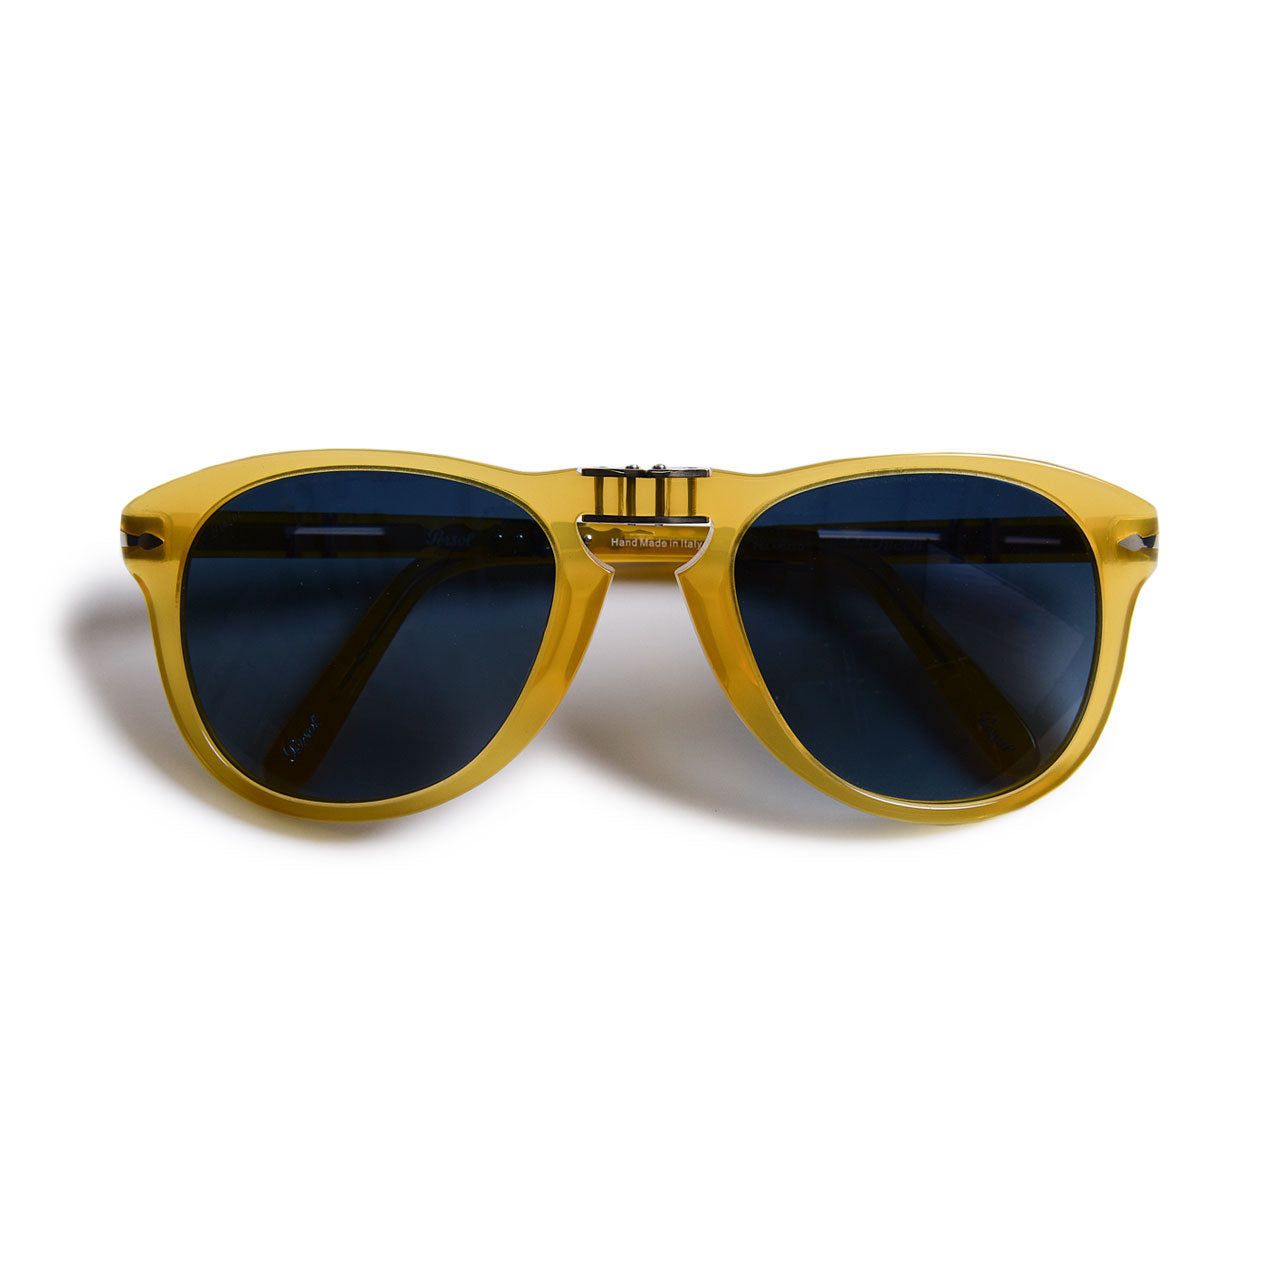 Persol 714 Steve McQueen Limited Edition Sunglasses